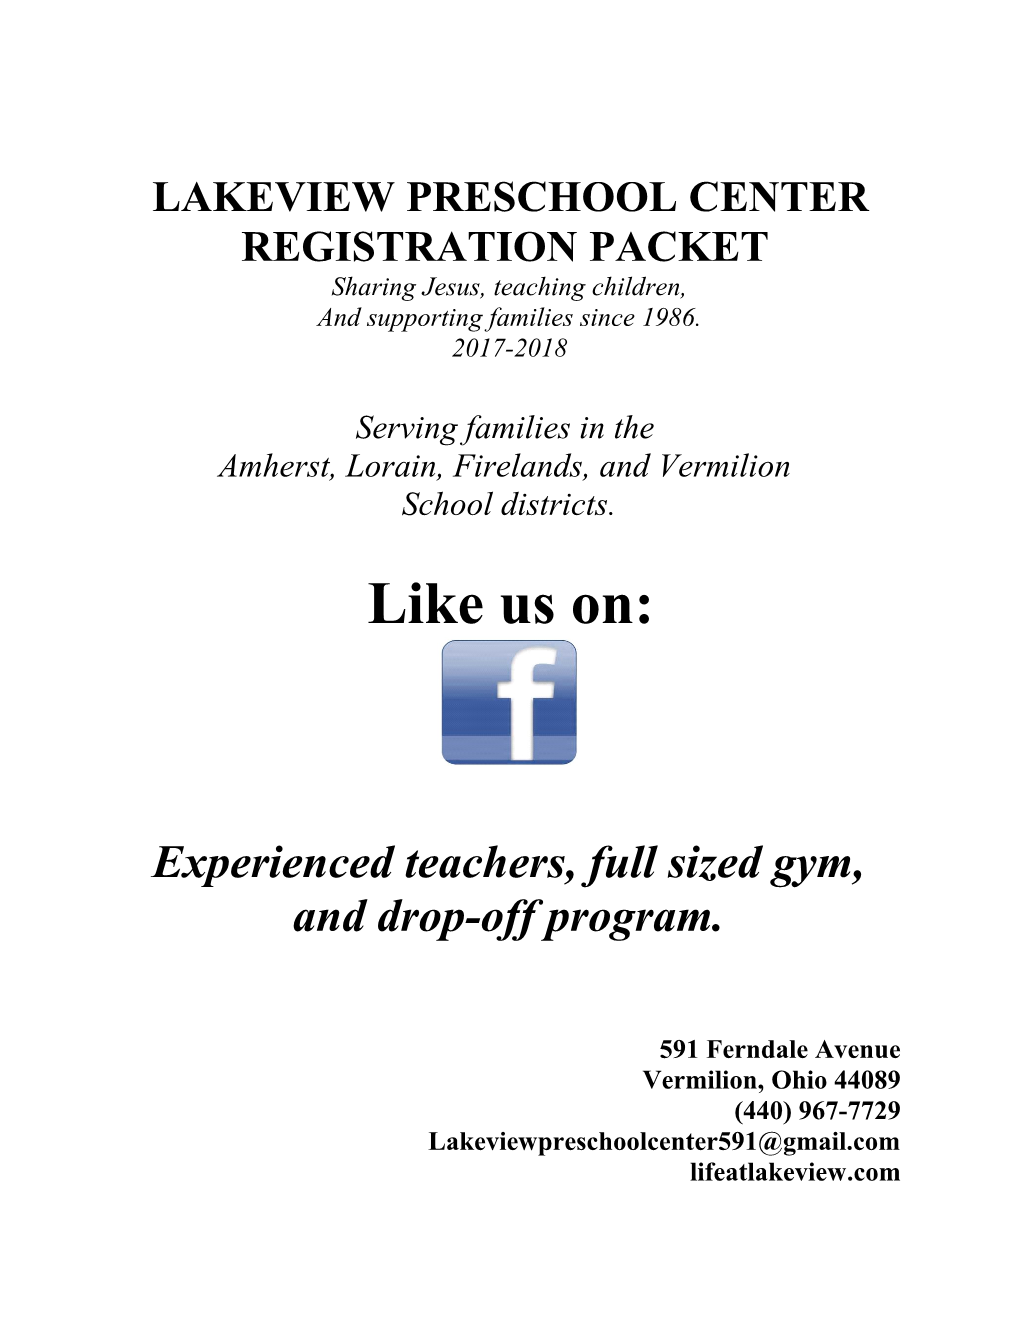 Lakeview Preschool Center